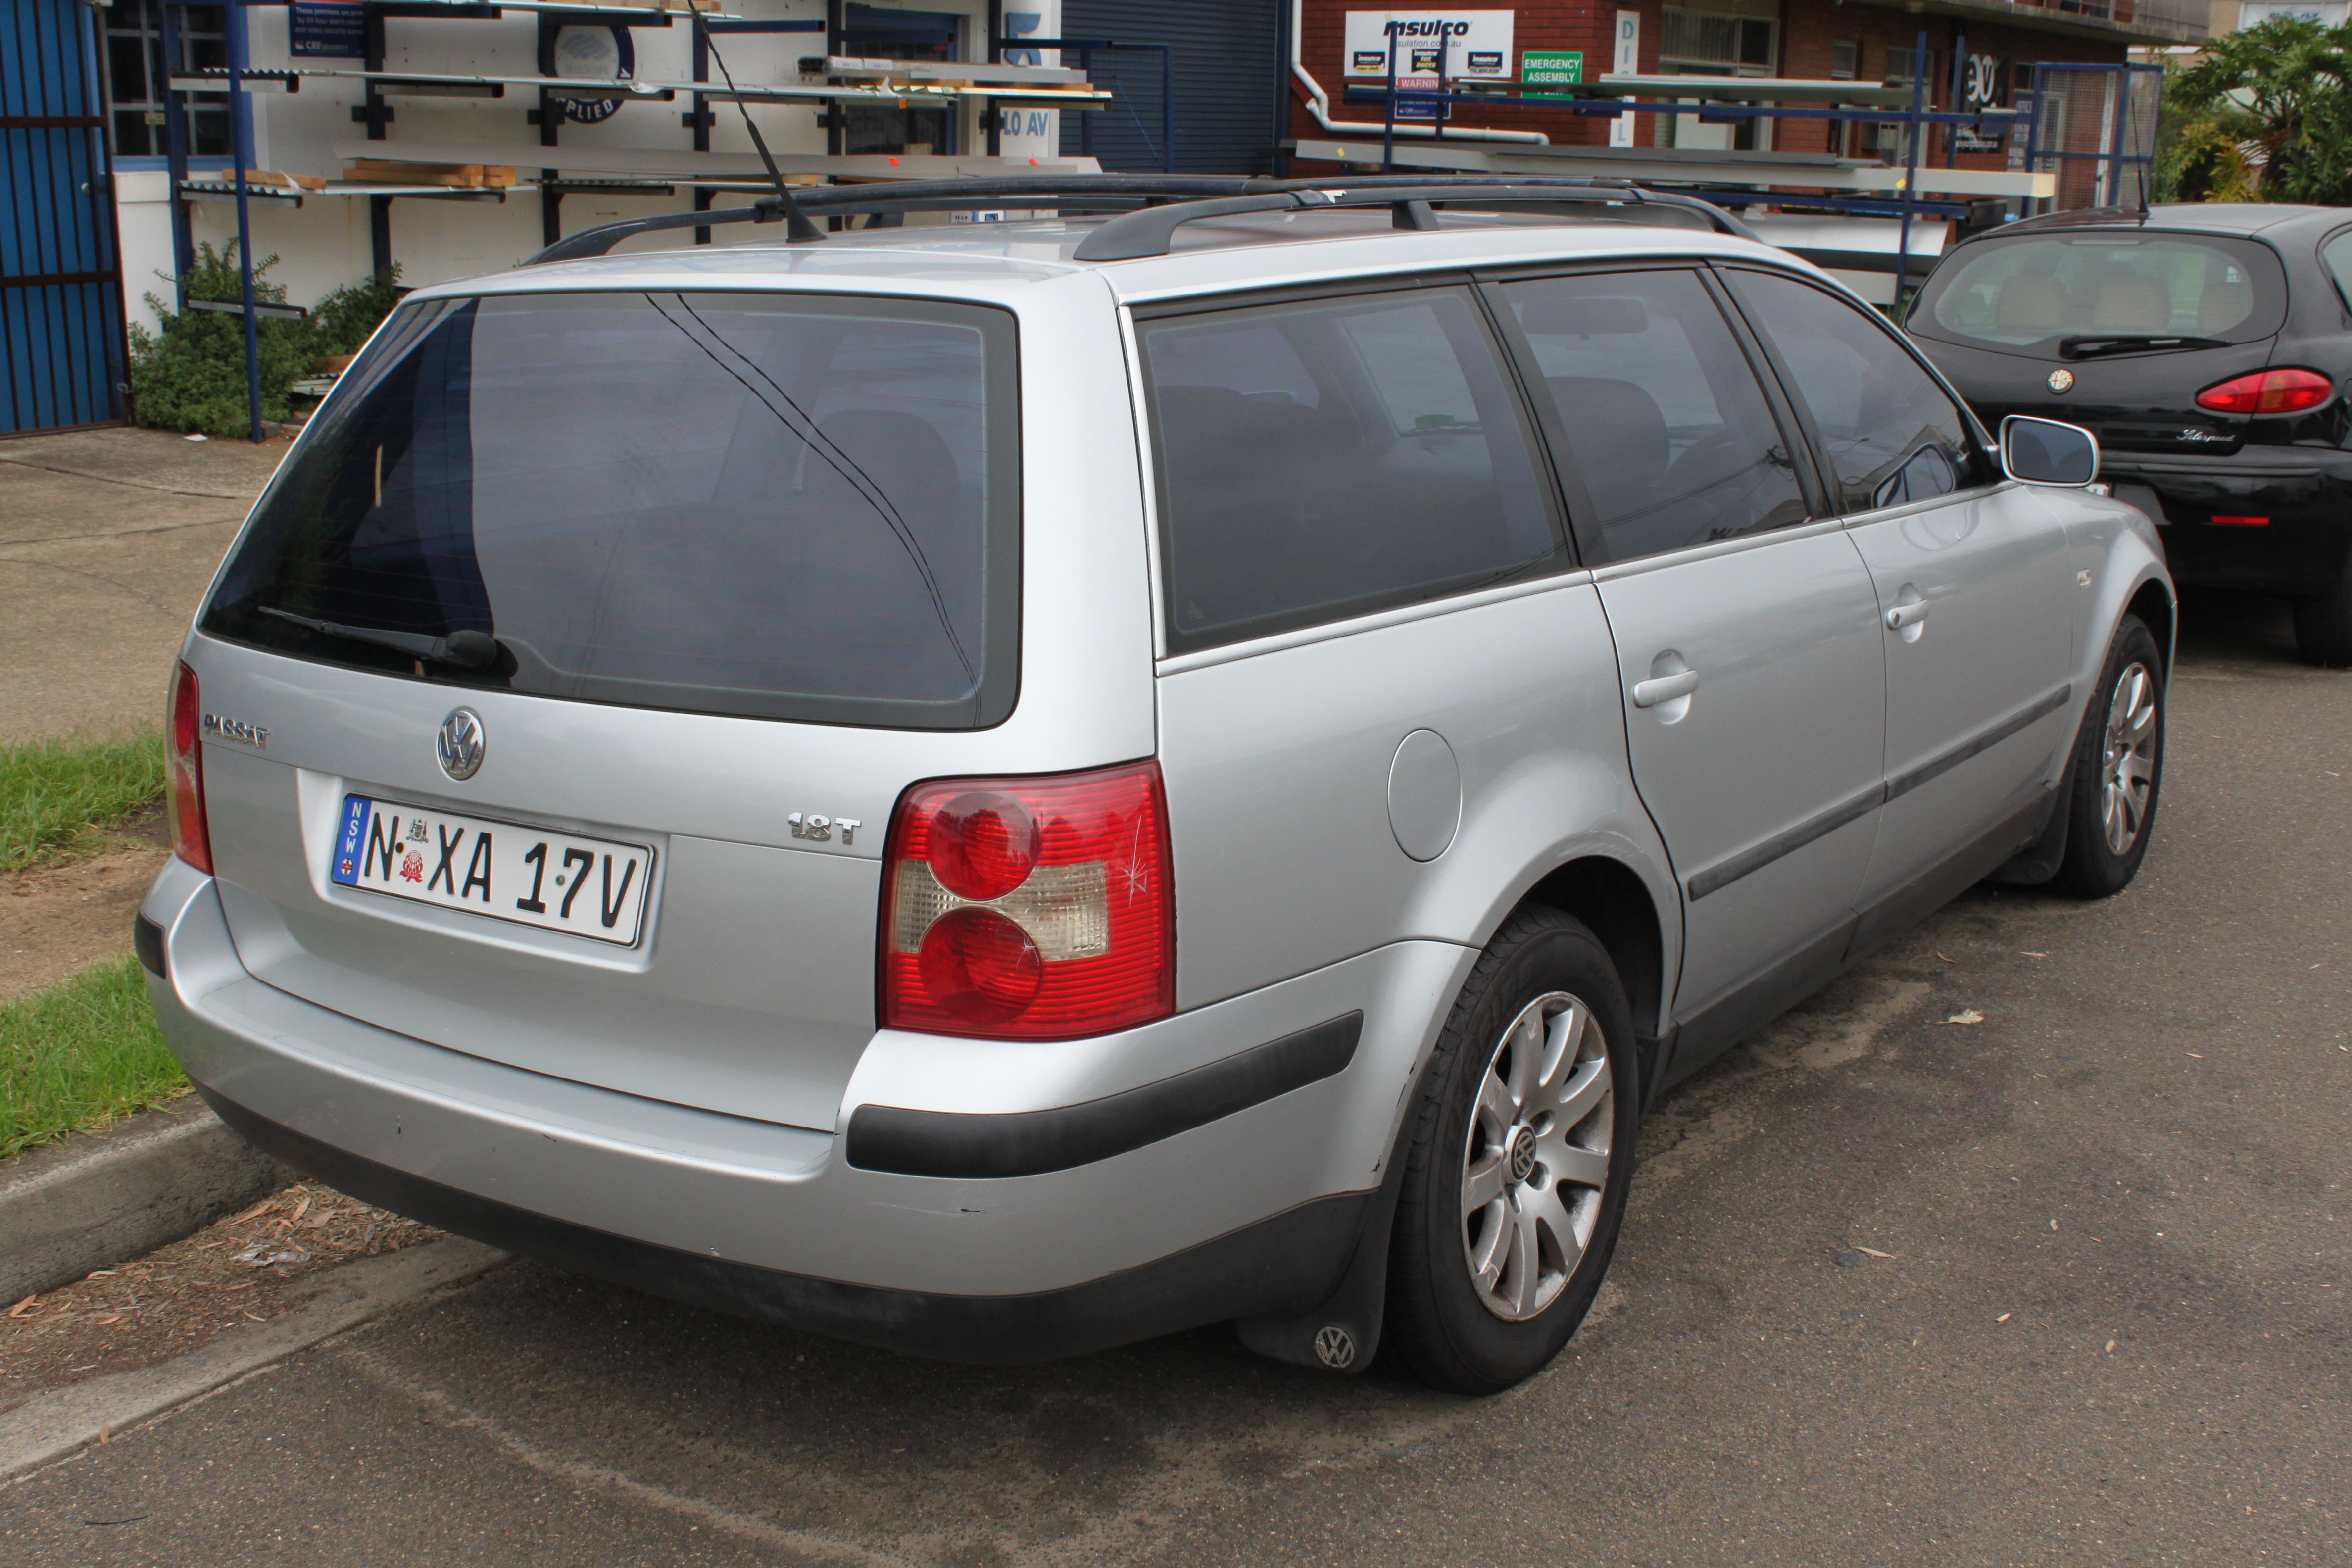 Archivo:2001 Volkswagen Passat (3BG) 1.8 T station wagon (24994547505).jpg  - Wikipedia, la enciclopedia libre